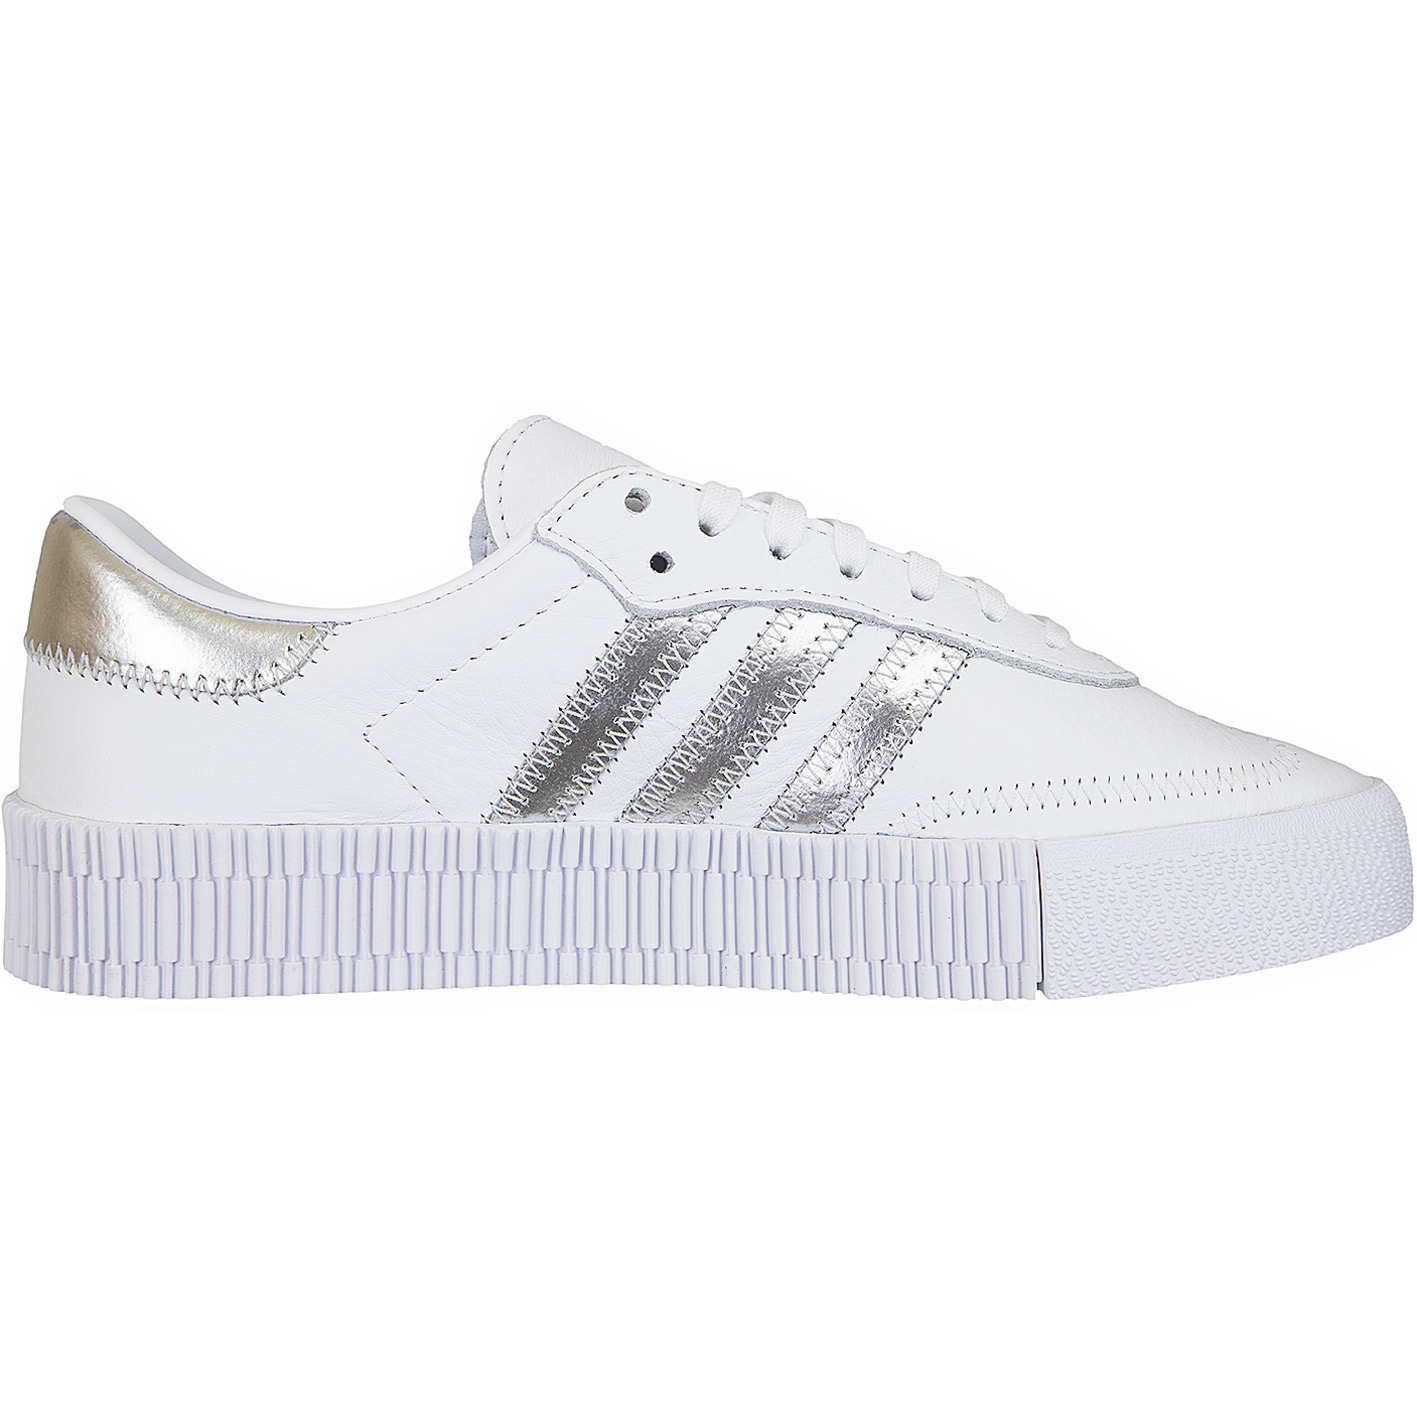 ☆ Adidas Originals Damen Sneaker Sambarose weiß/silber - hier bestellen!